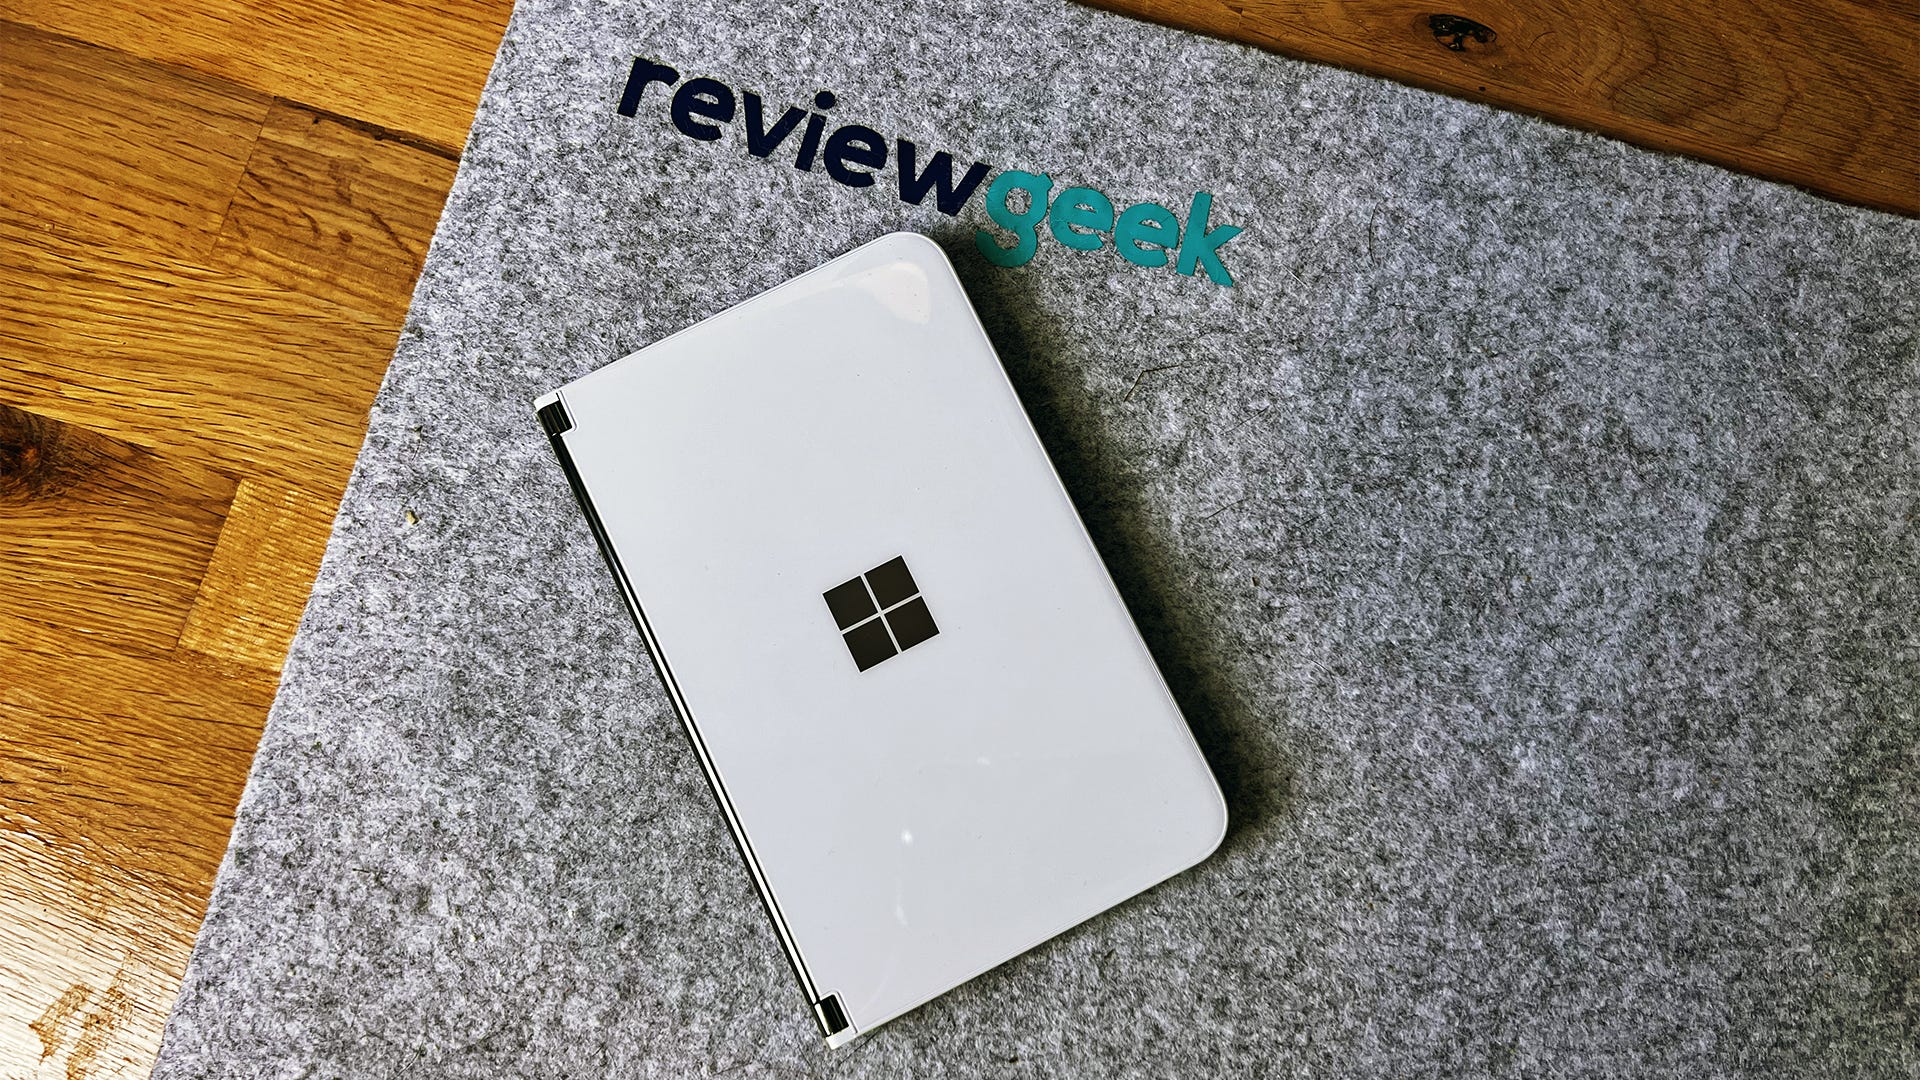 Fristående Surface Duo 2 på en matta med Review Geek-logotypen